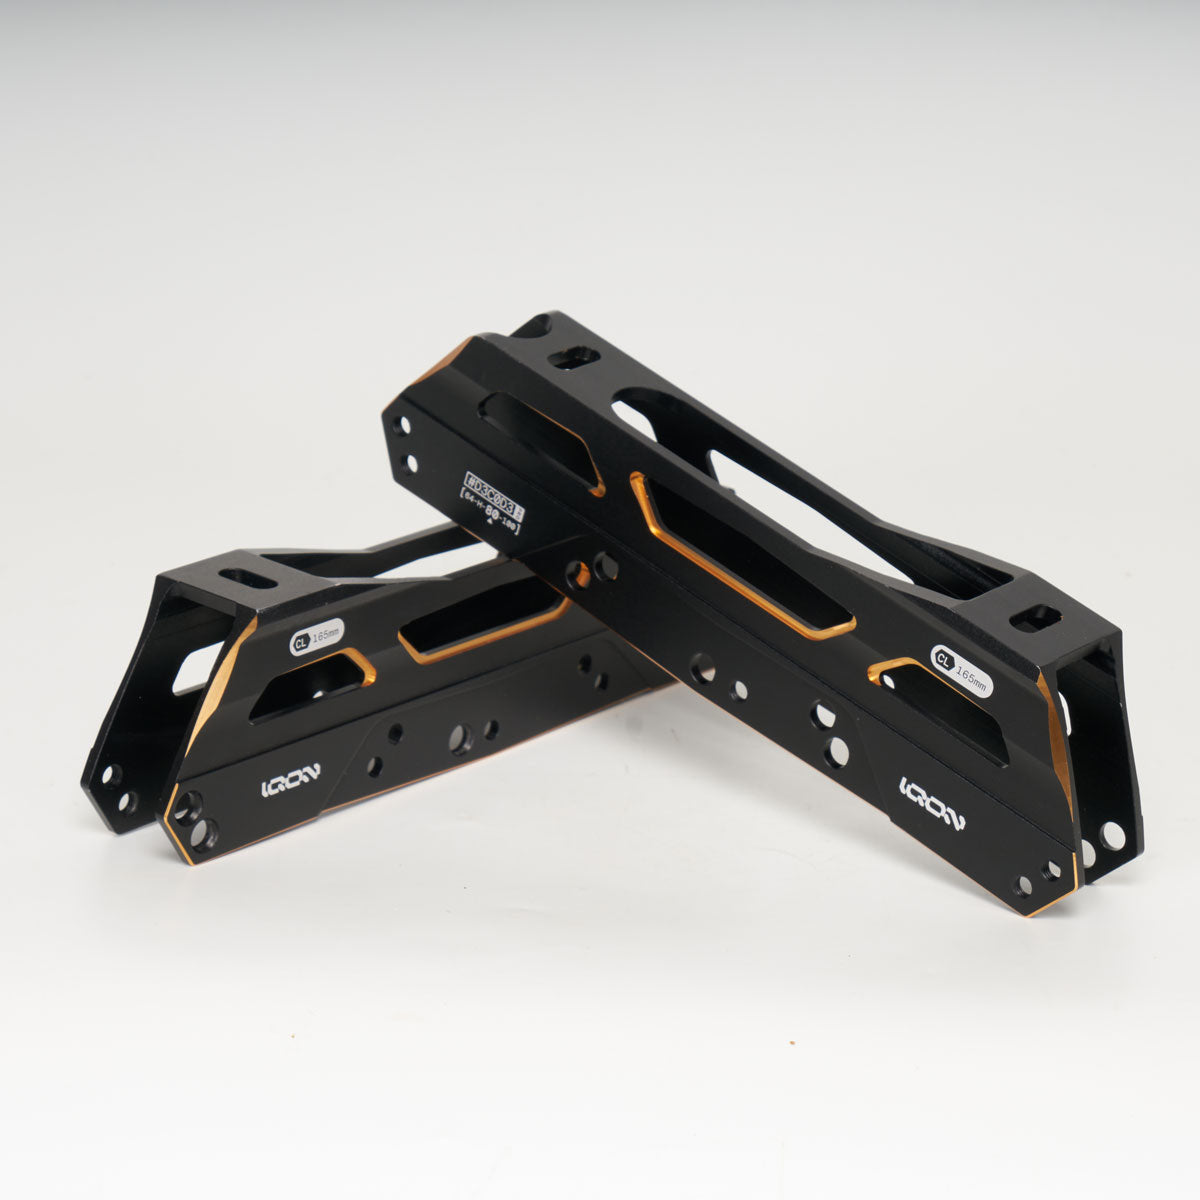 Iqon Decode 80 Frames - Black/Copper - Classic 165mm Mount (Includes bearings)